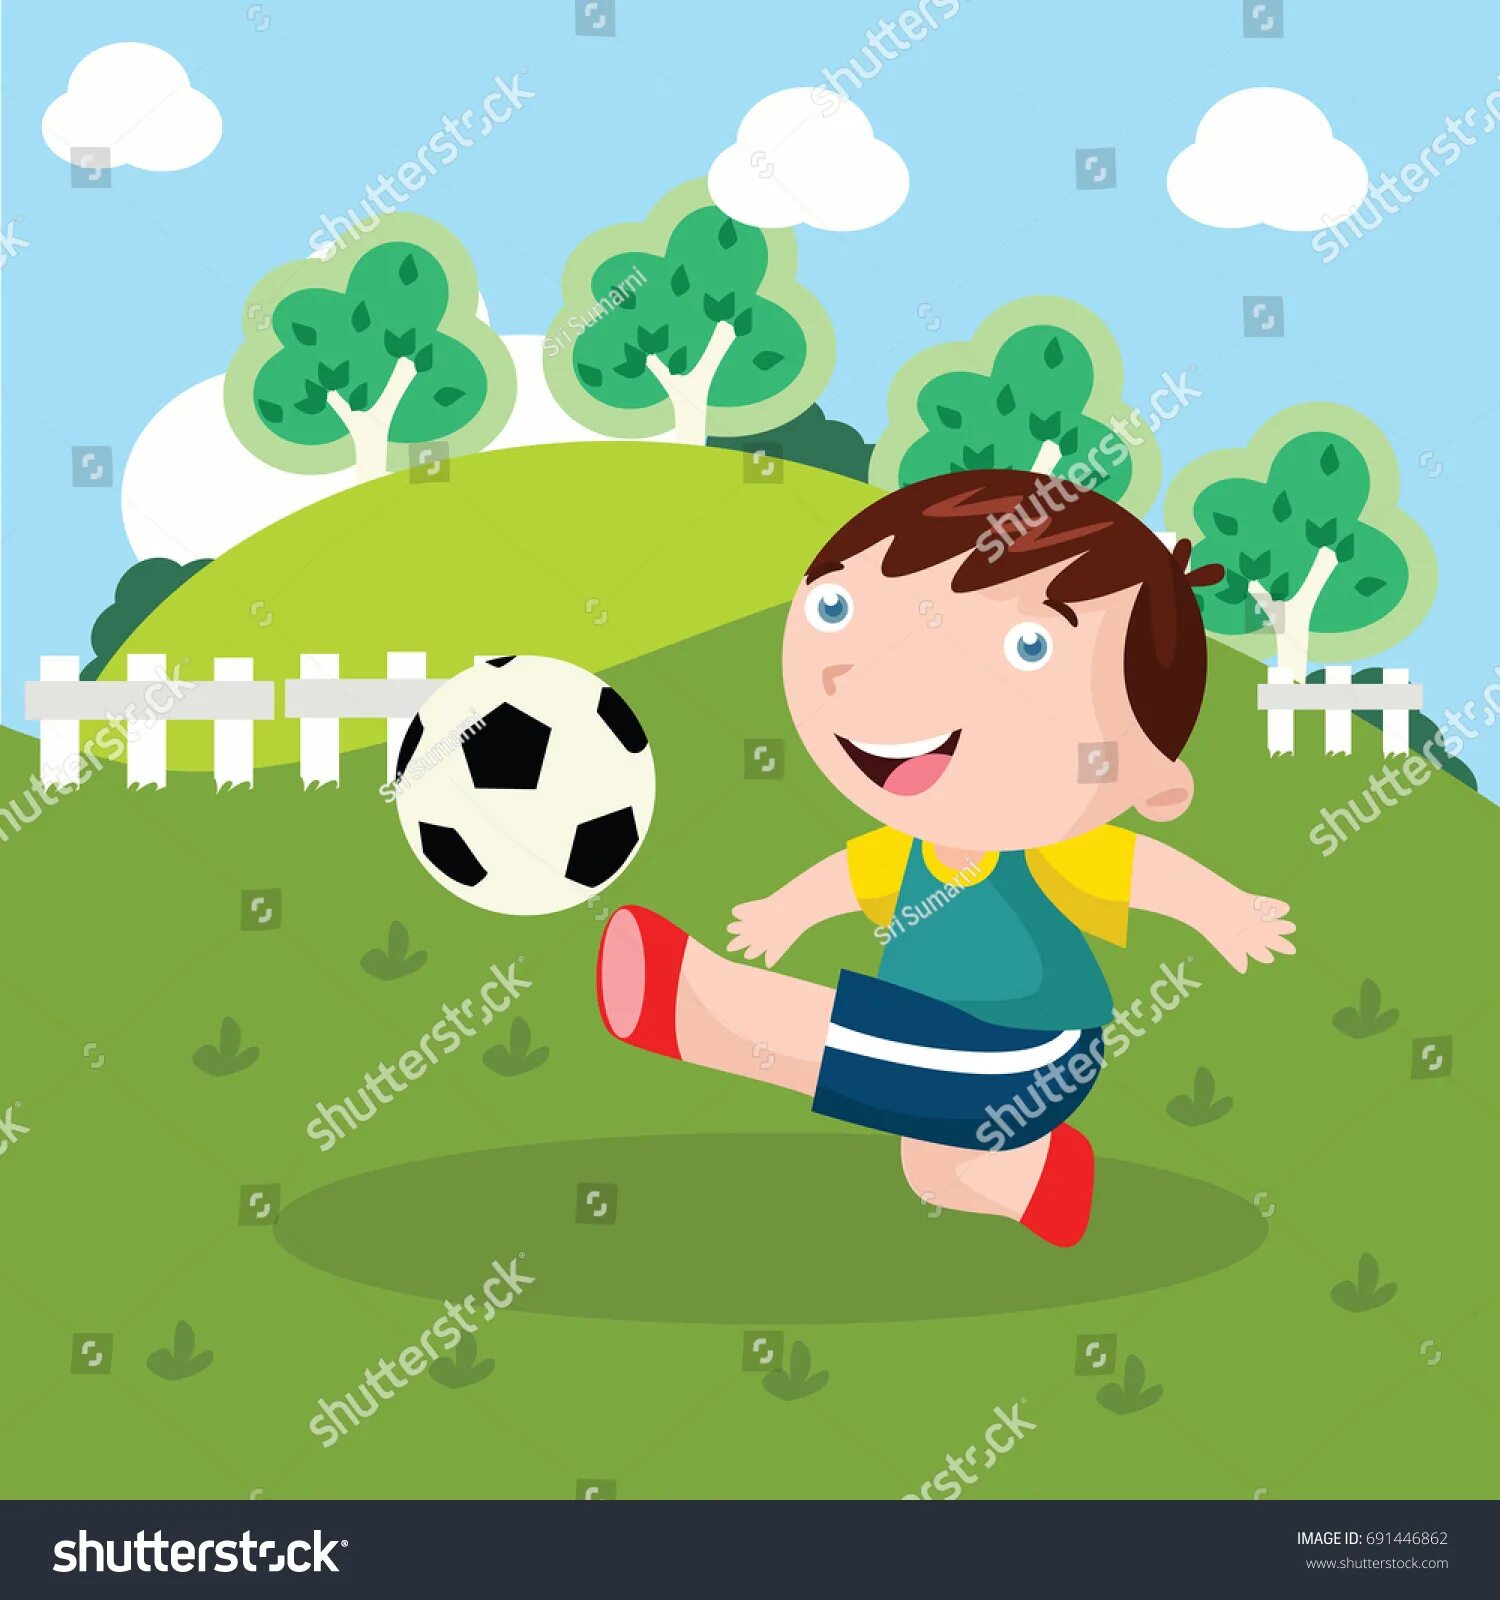 I can playing football. Футбол мультяшный. Играющие в футбол дети иллюстрация. Футбол картины для детей. Игра в футбол мультяшная.